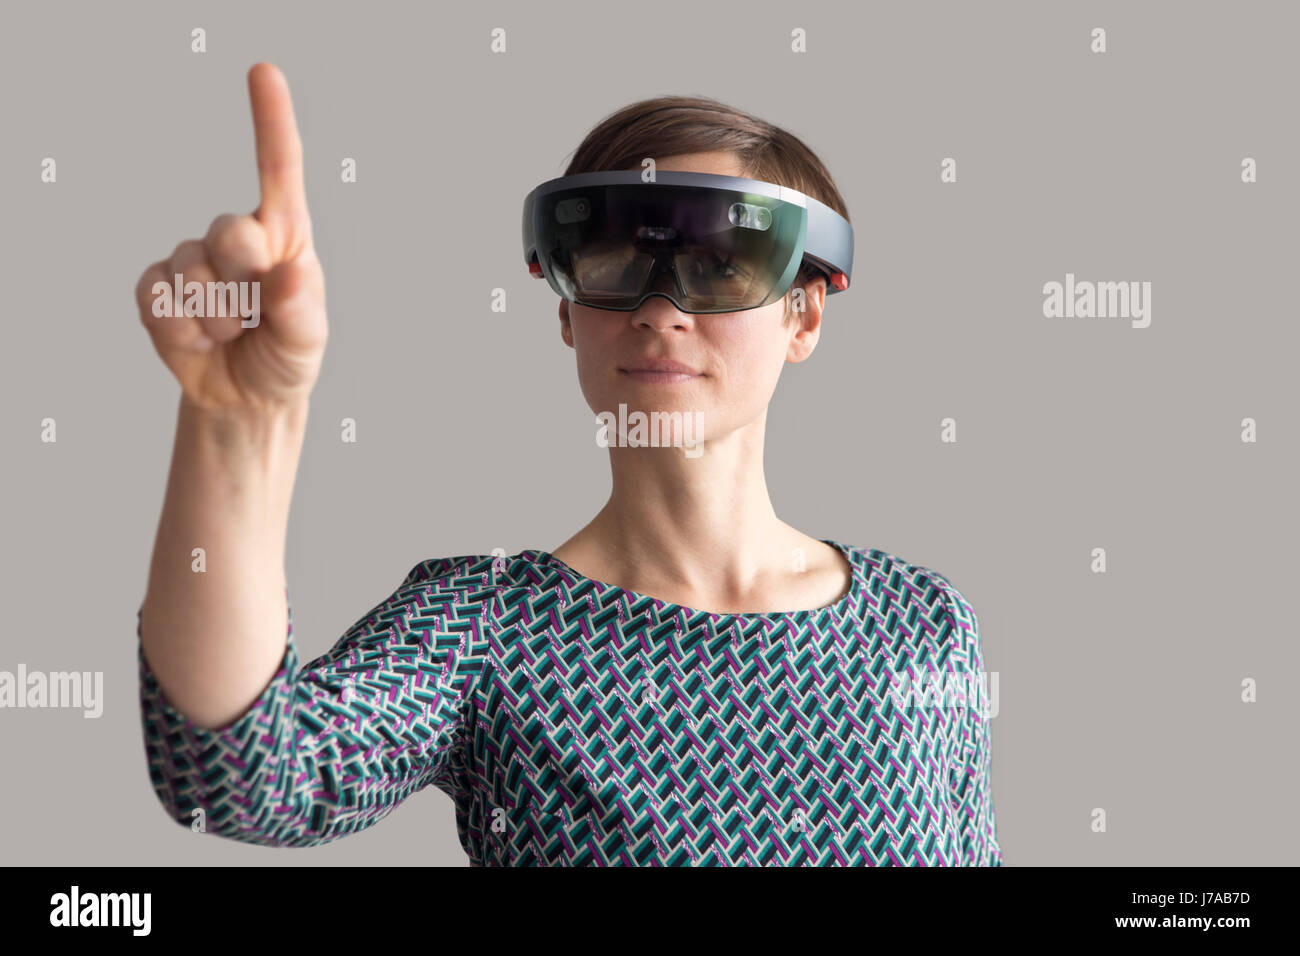 Woman wearing mixed reality smartglasses raising her hand Stock Photo